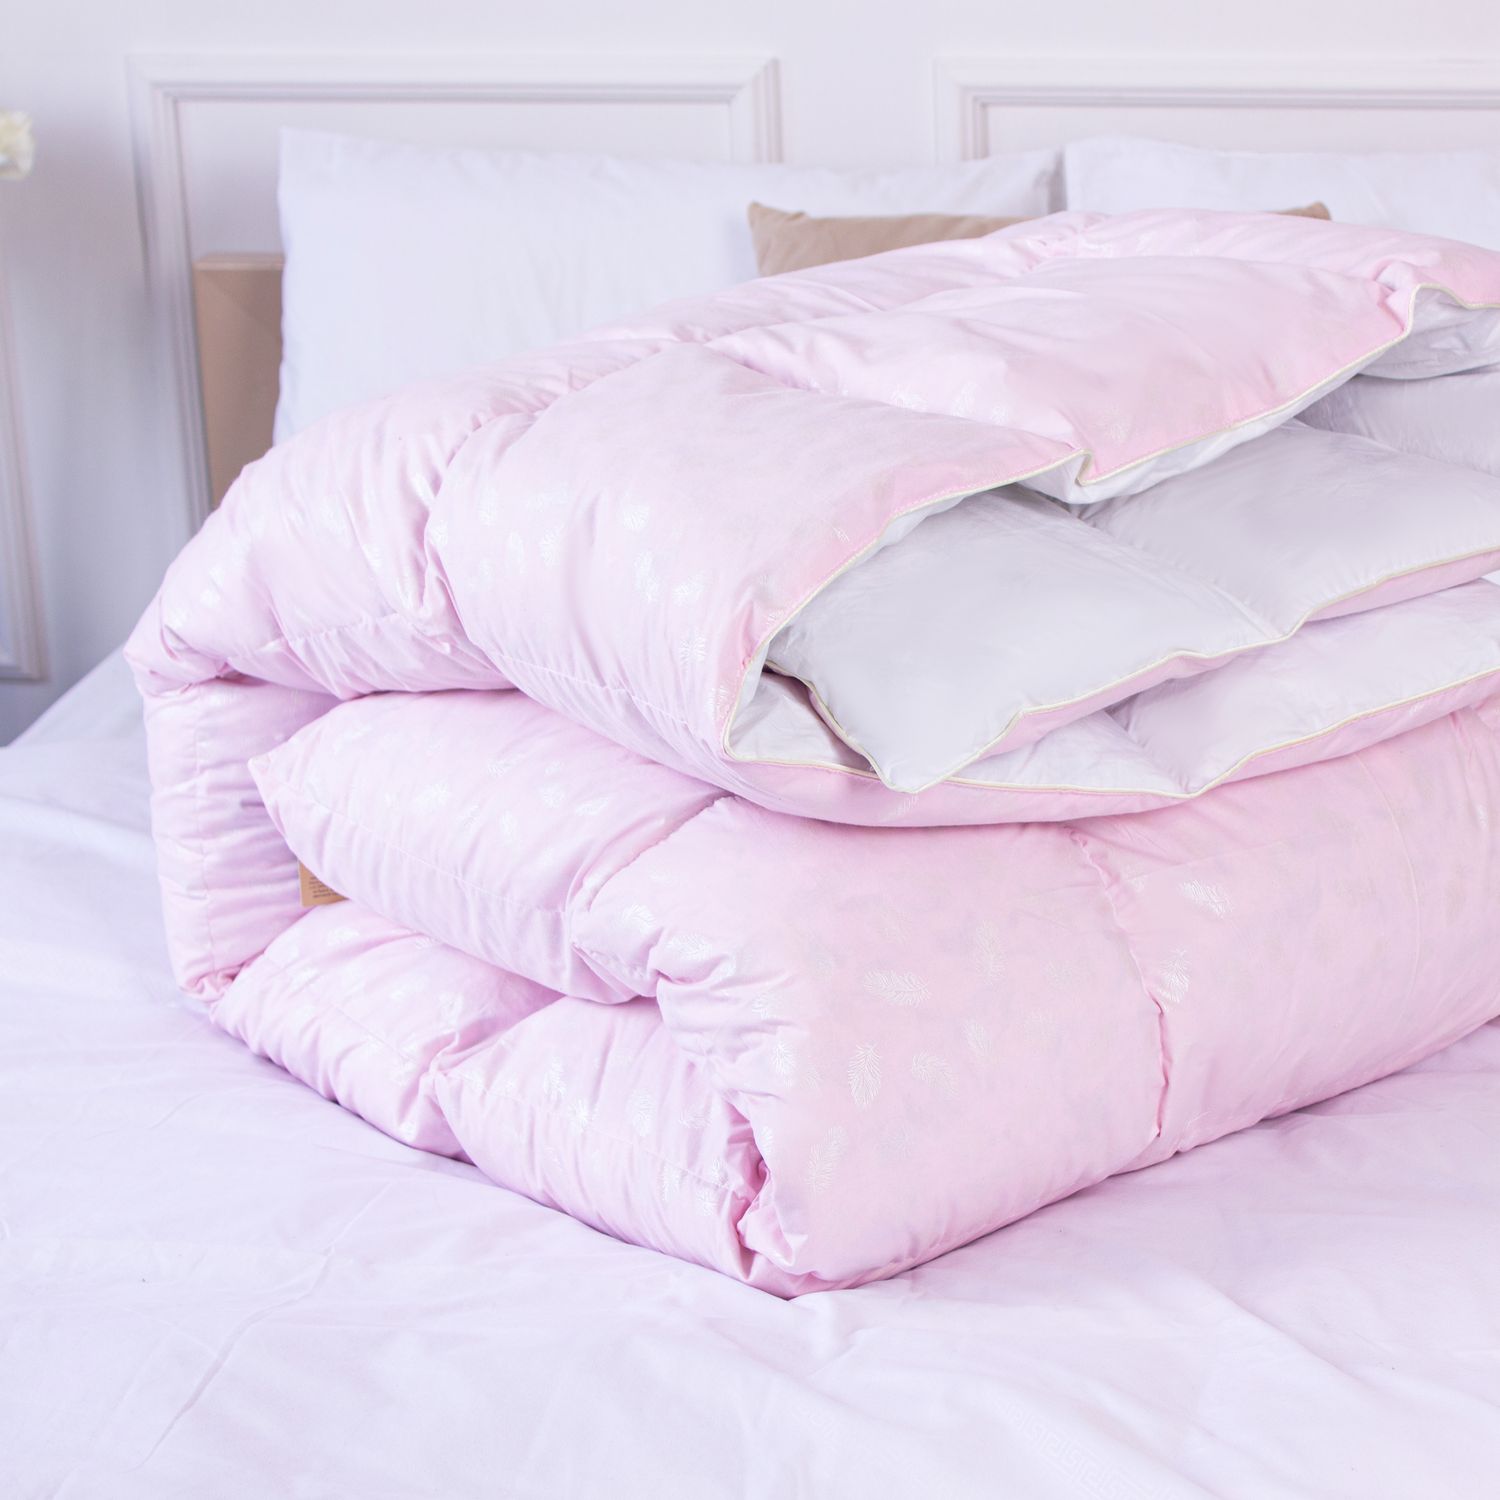 Одеяло пуховое MirSon Karmen №1859 Bio-Pink, 70% пух, полуторное, 205x140, розовое (2200003014594) - фото 3